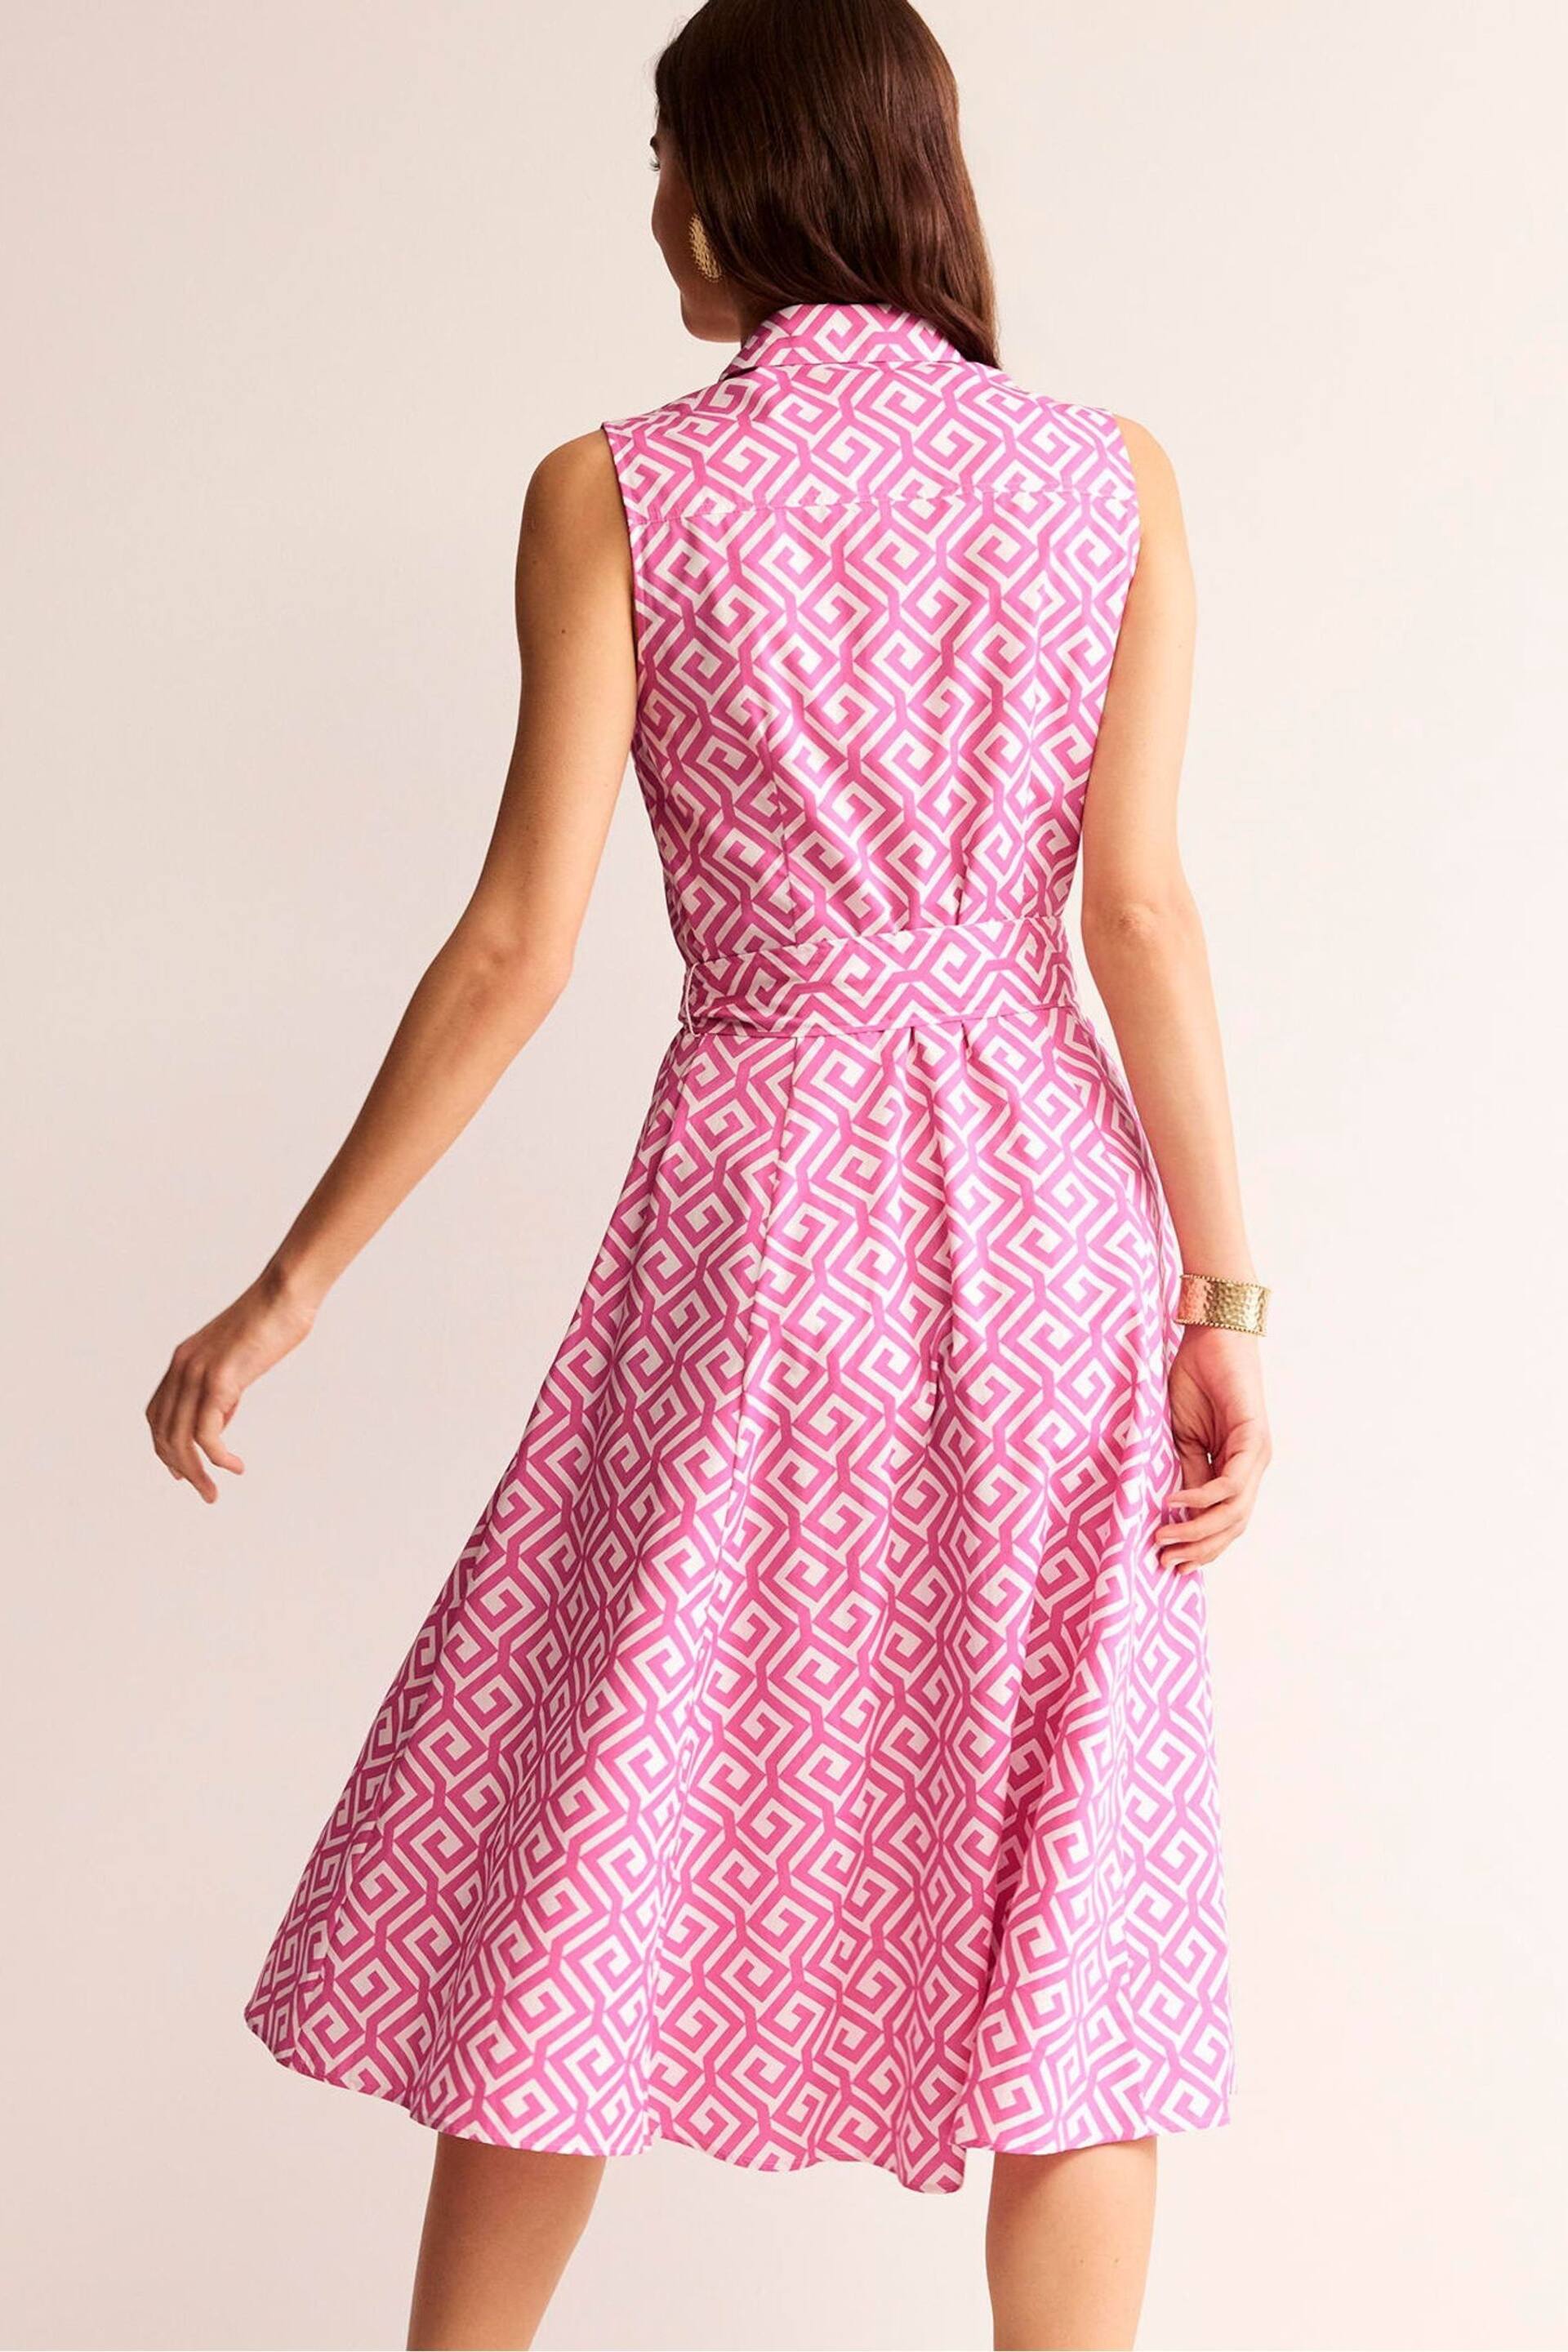 Boden Pink Amy Sleeveless Shirt Dress - Image 2 of 4